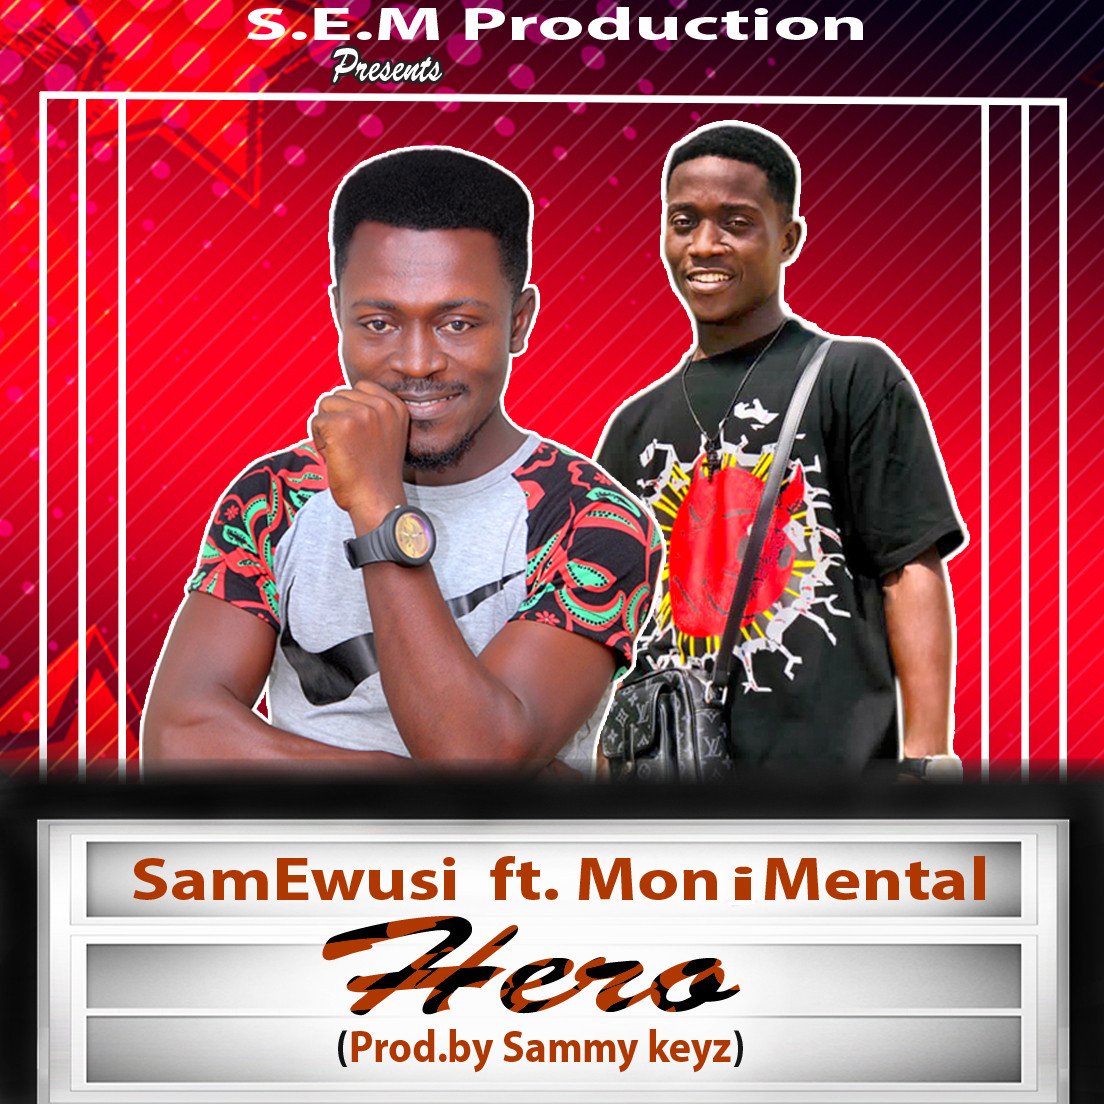 SamEwusi Ft. Monimental - Hero